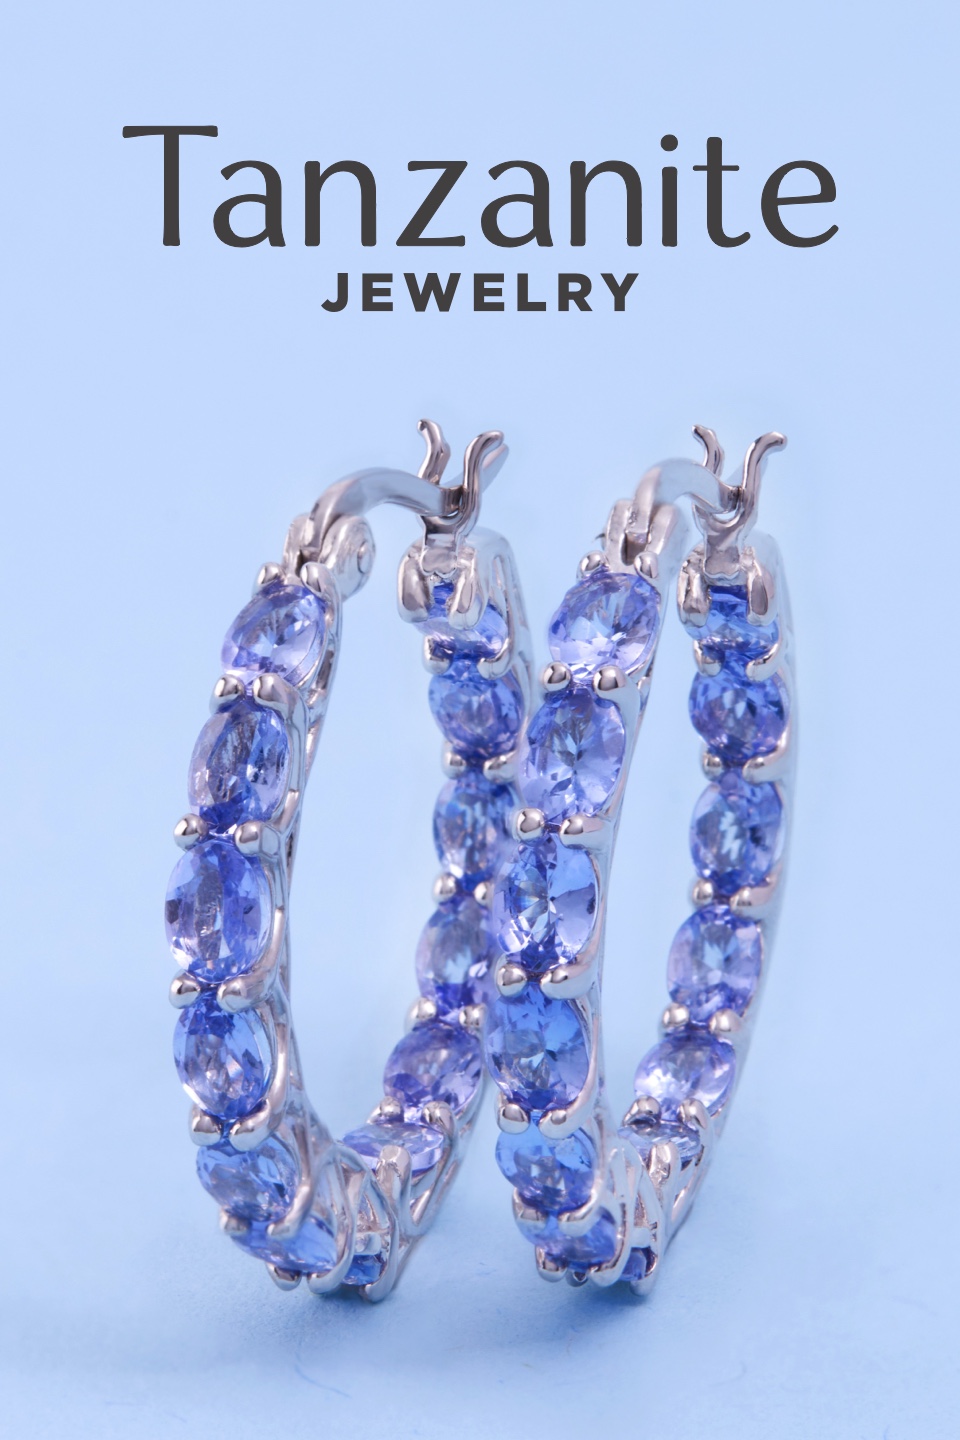 Series Banner for Tanzanite Jewelry